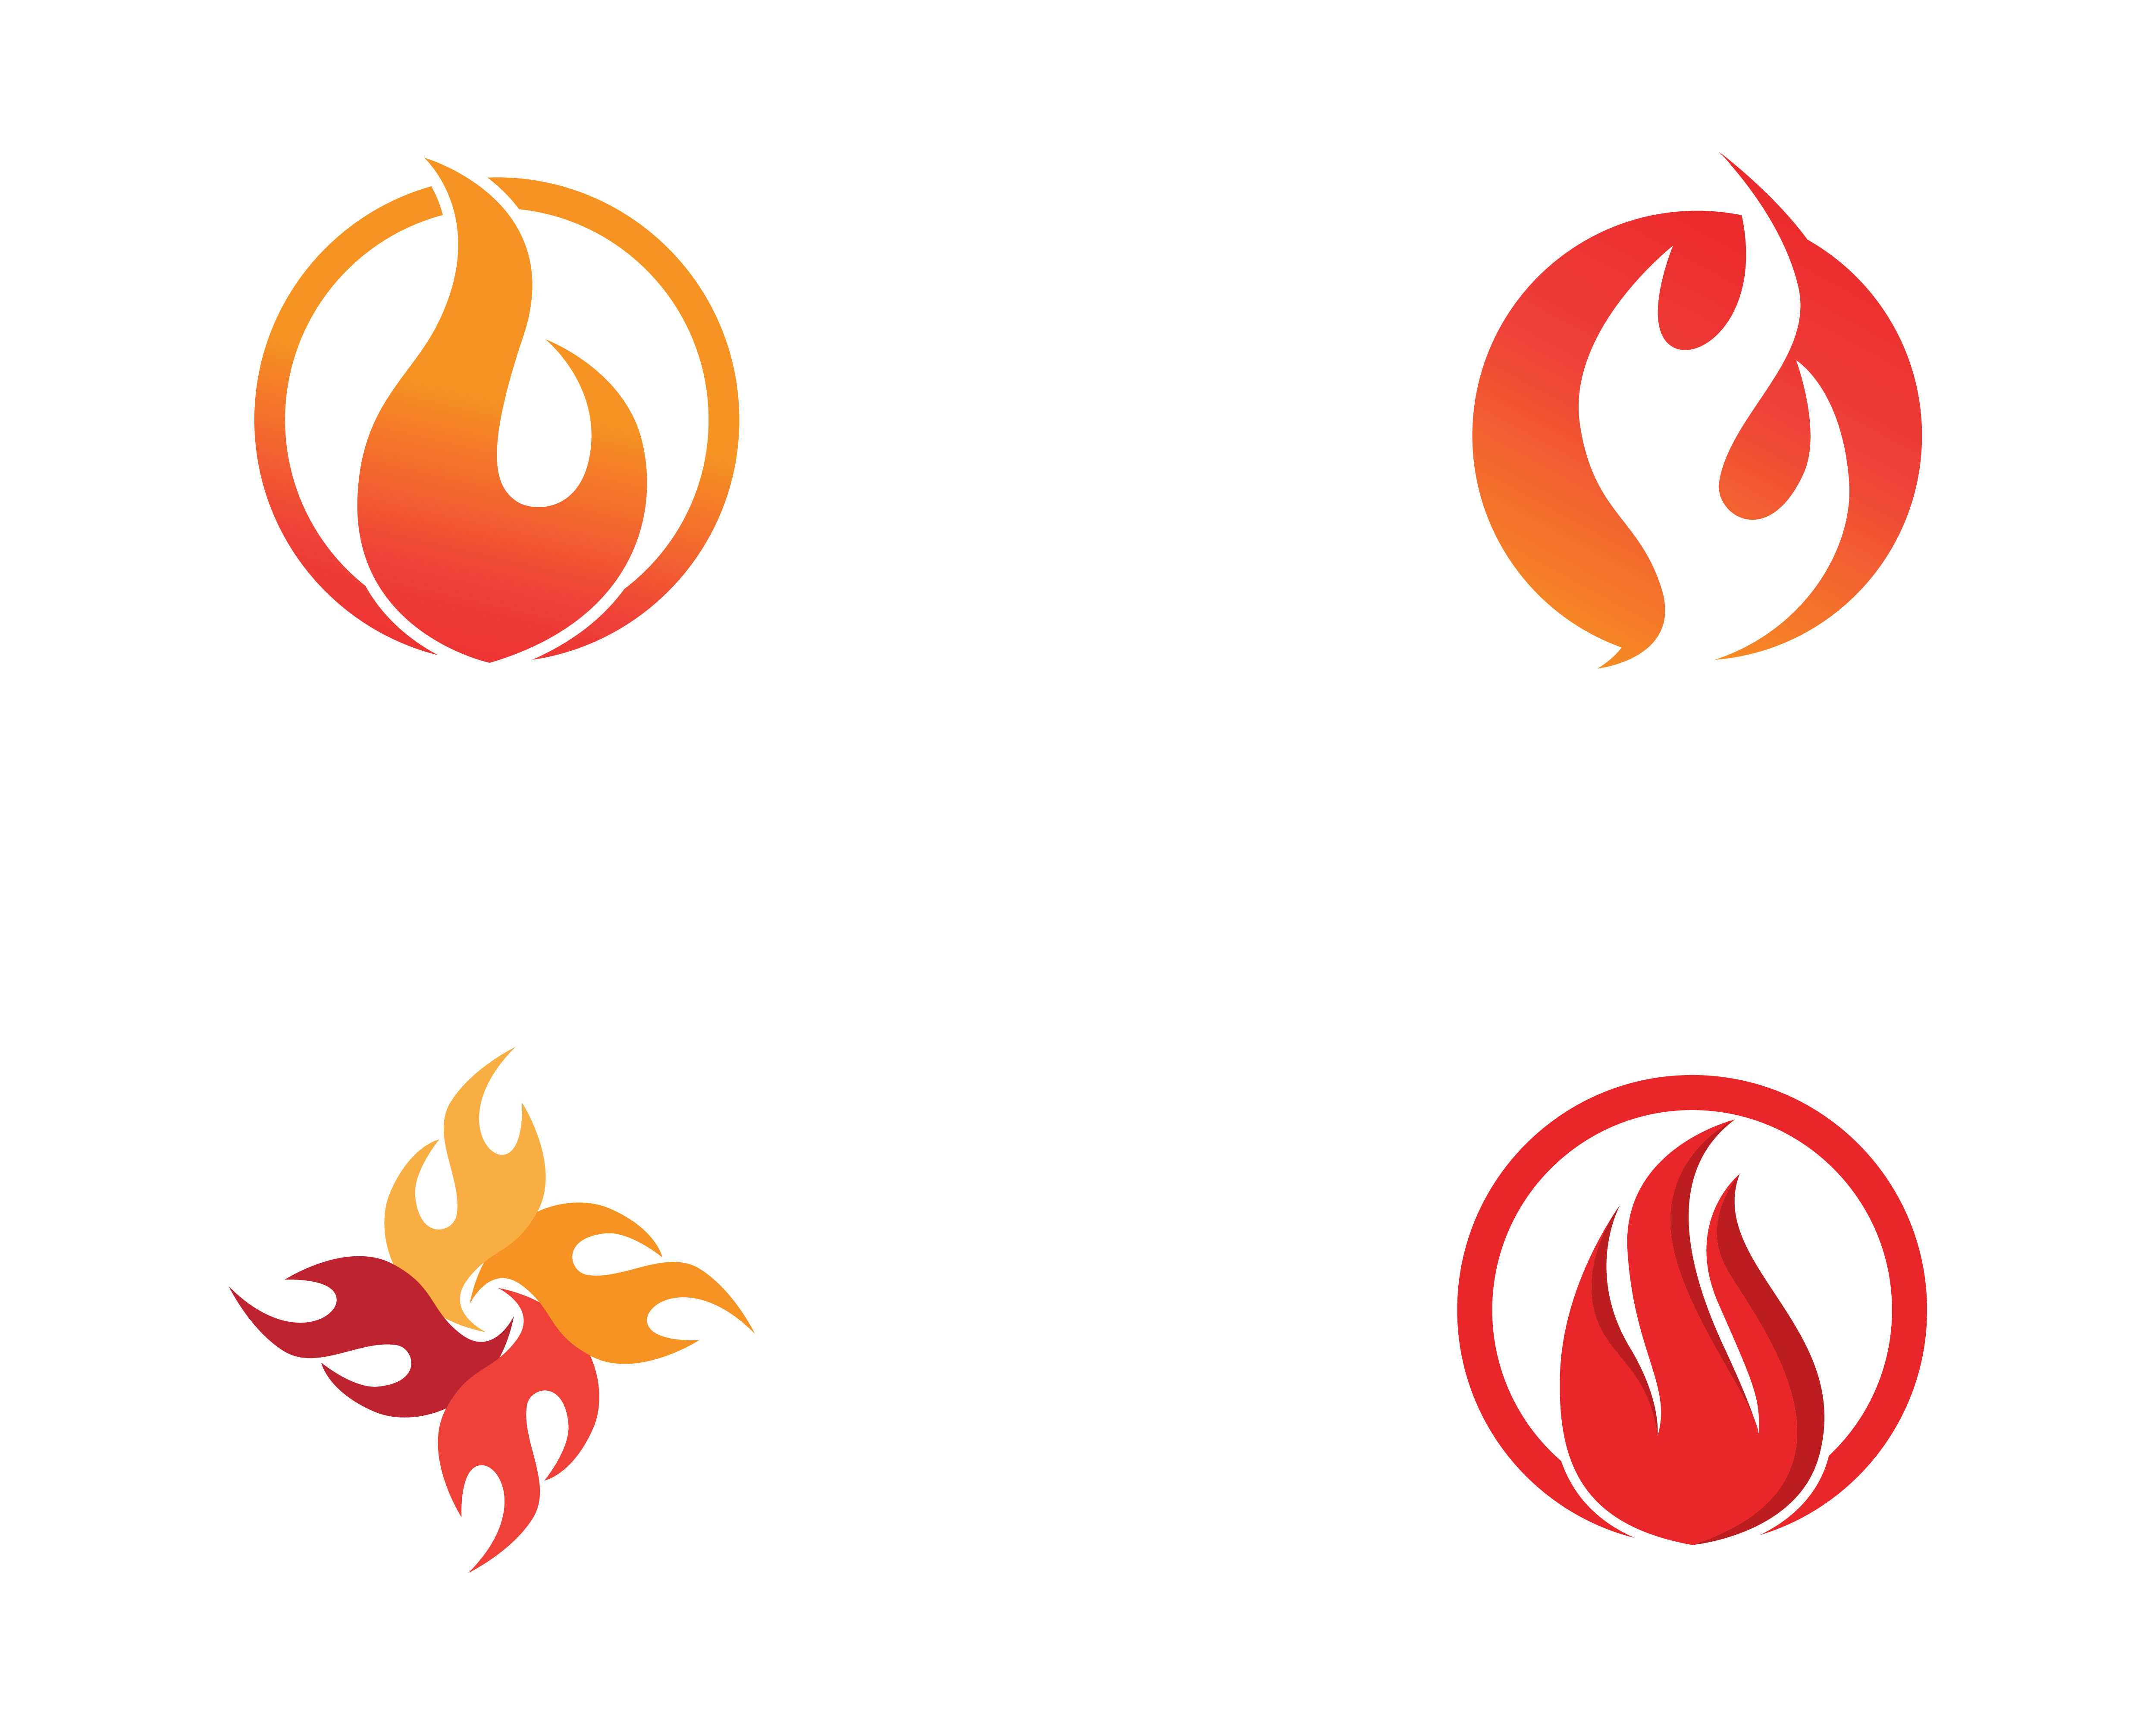 ícones de fogo isolados no fundo branco. ícone de fogo linha fina contorno  símbolo de fogo linear para logotipo, web, app, ui. sinal simples de ícone  de fogo. 5391680 Vetor no Vecteezy